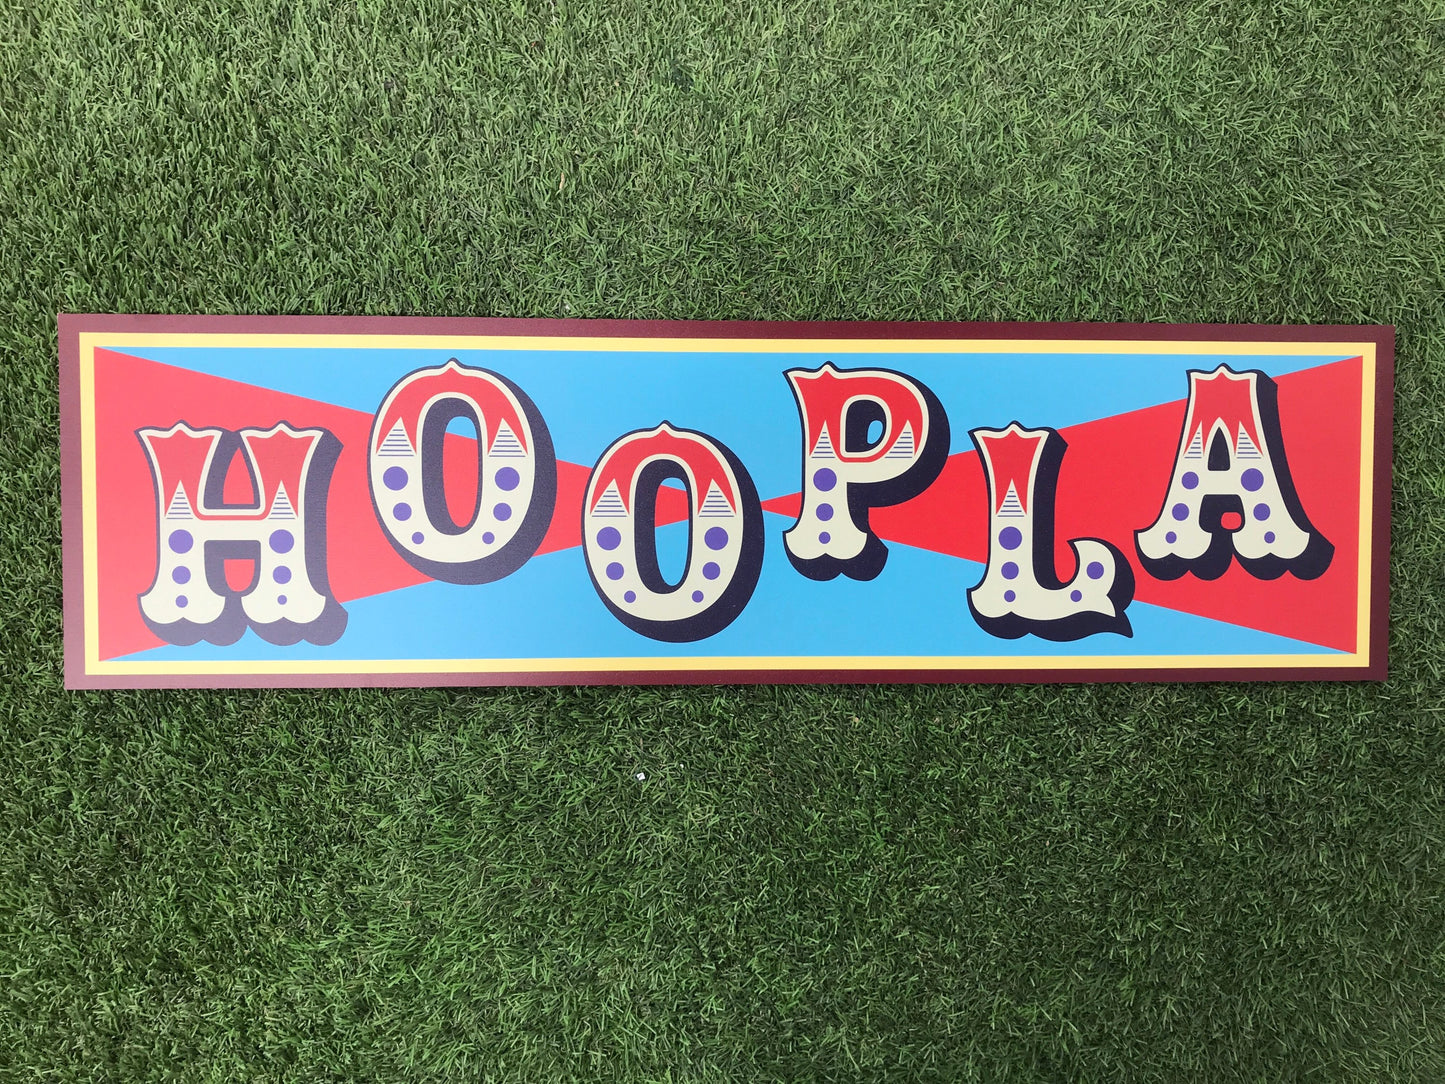 Hoopla Sign